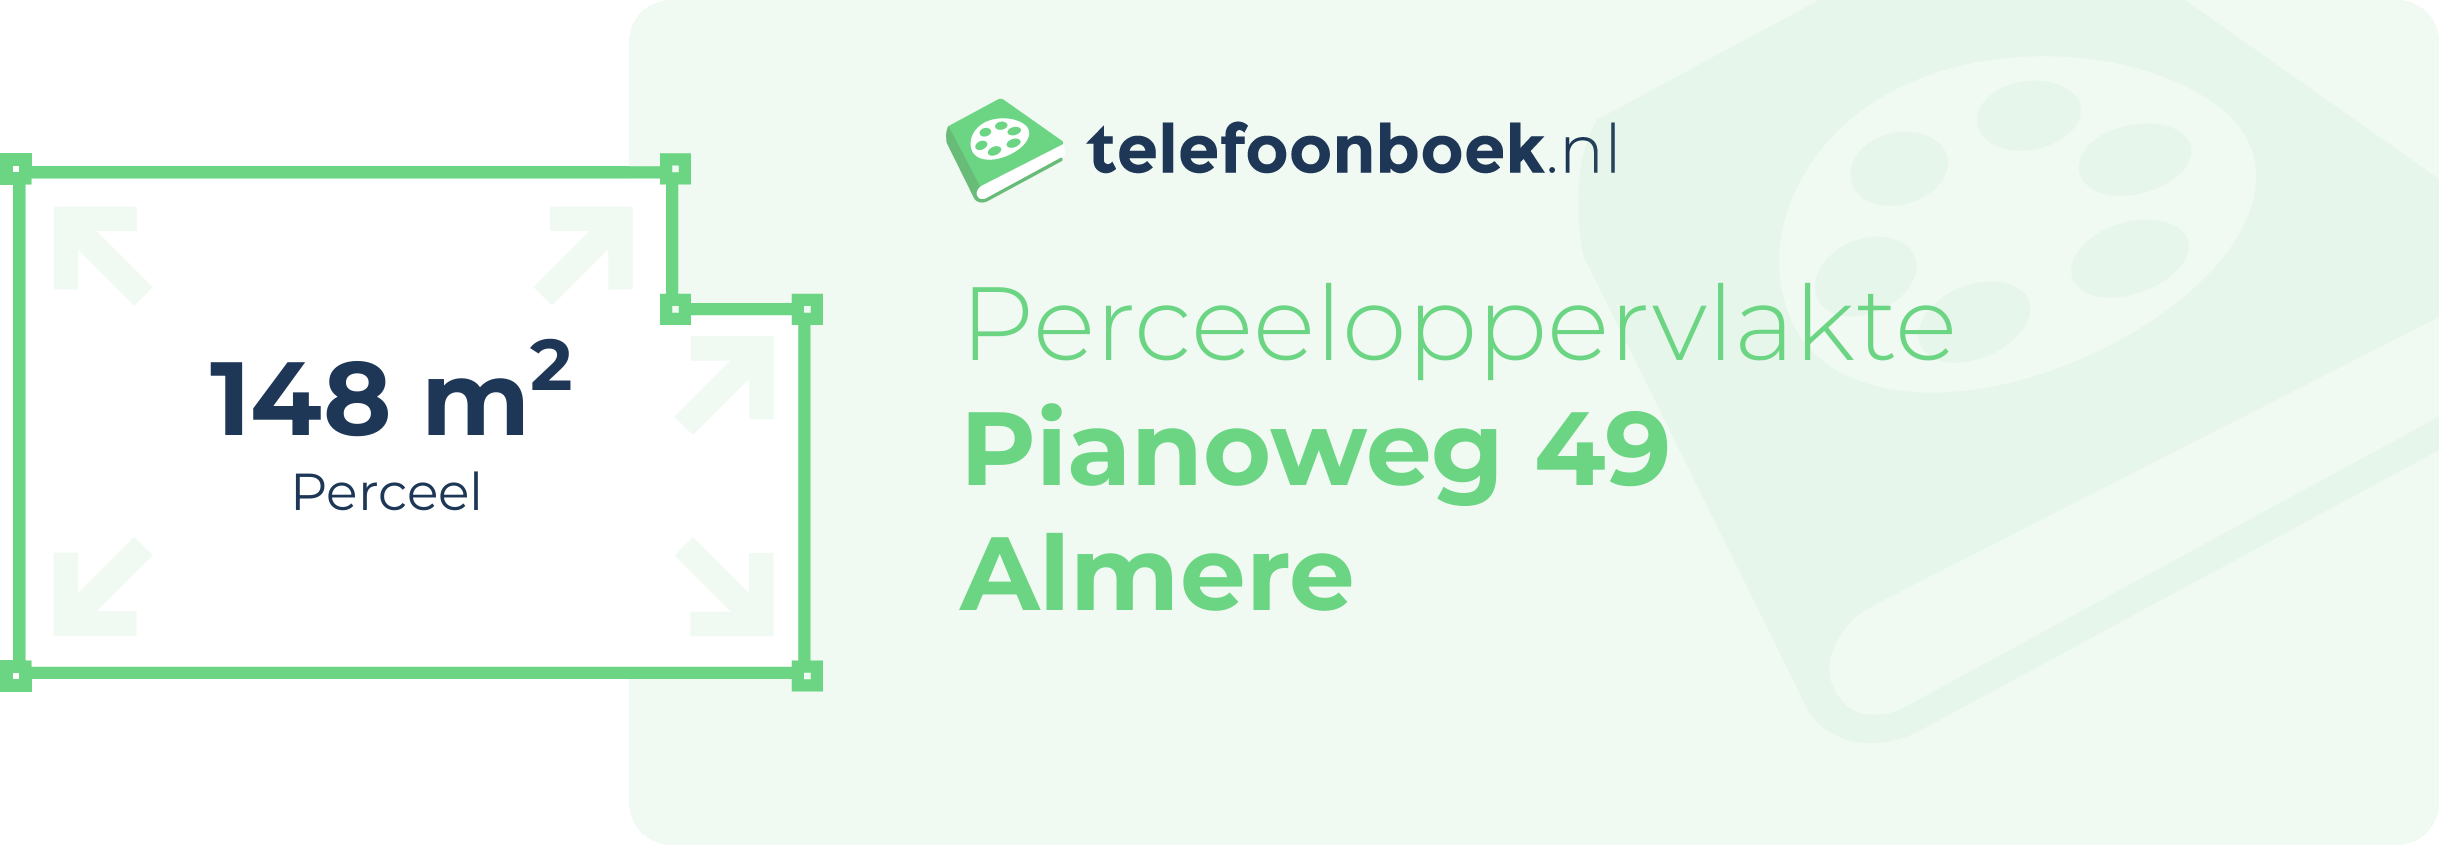 Perceeloppervlakte Pianoweg 49 Almere